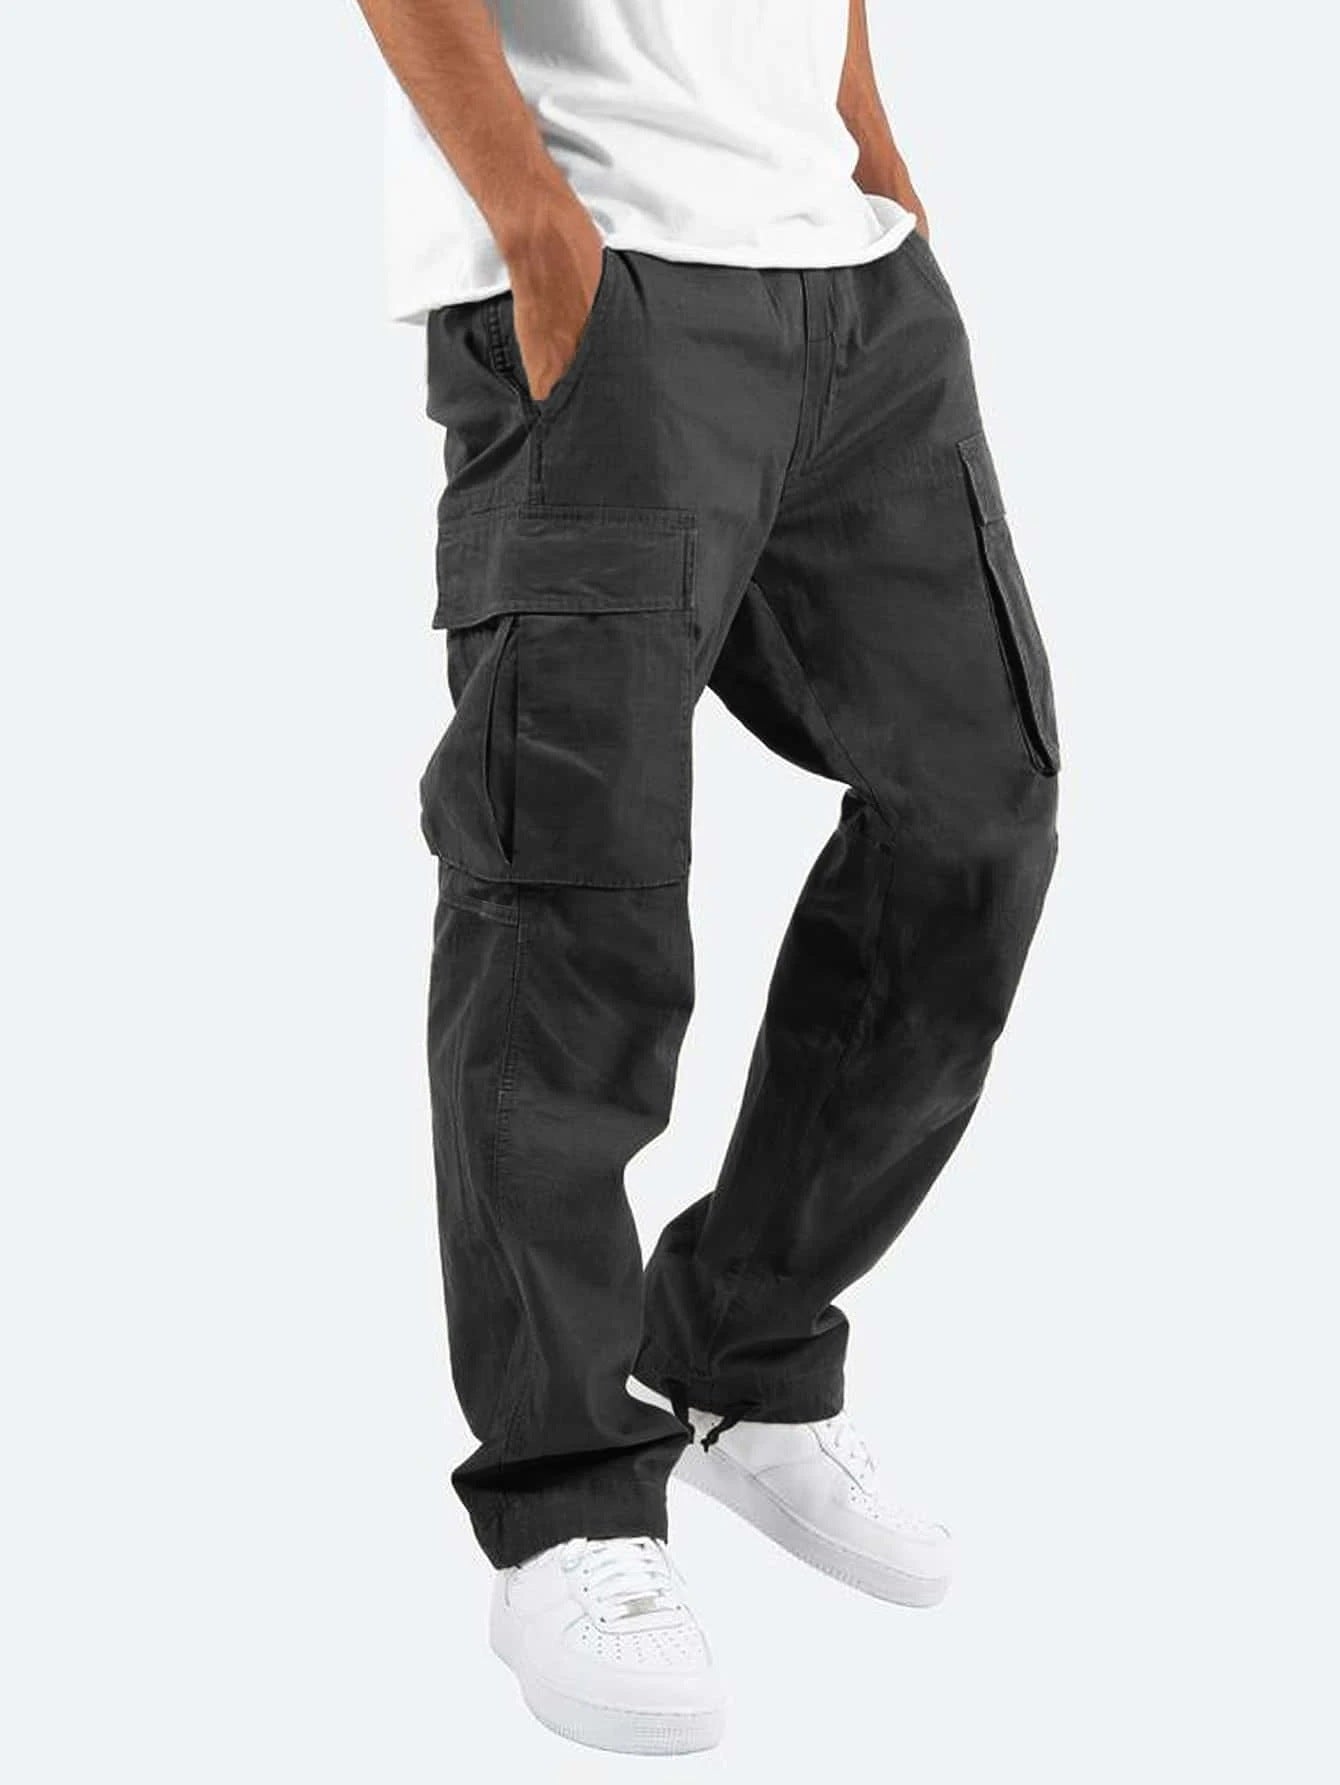 Functional Men's Workwear Pants: Drawstring, Multi-Pocket Design - HalleBeauty